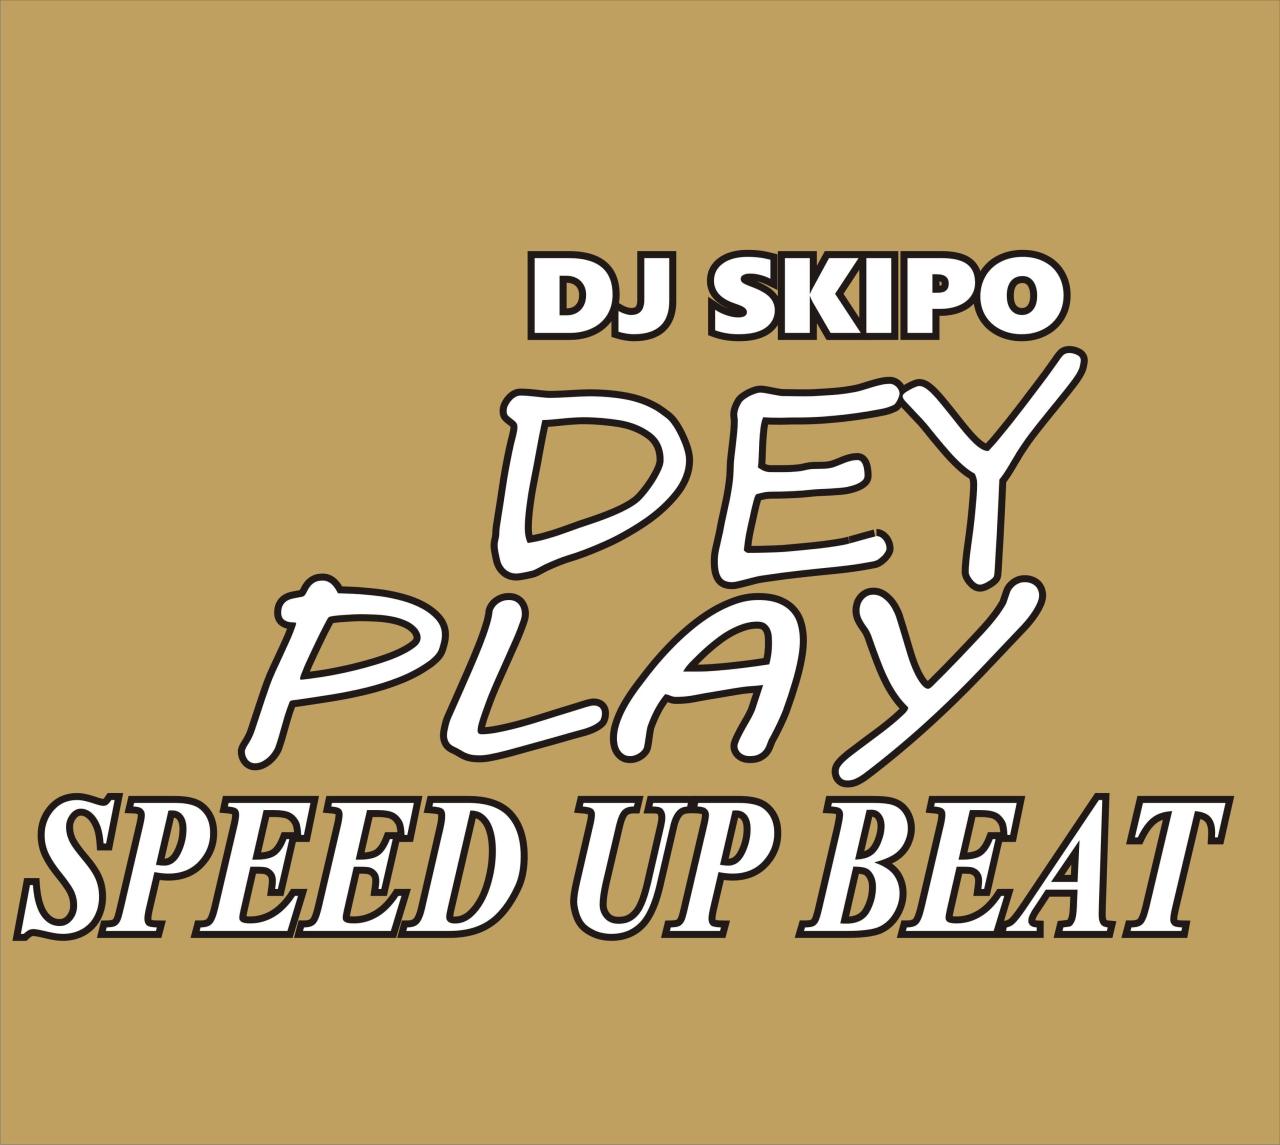 DJ Skipo Dey Play Beat Speed Up